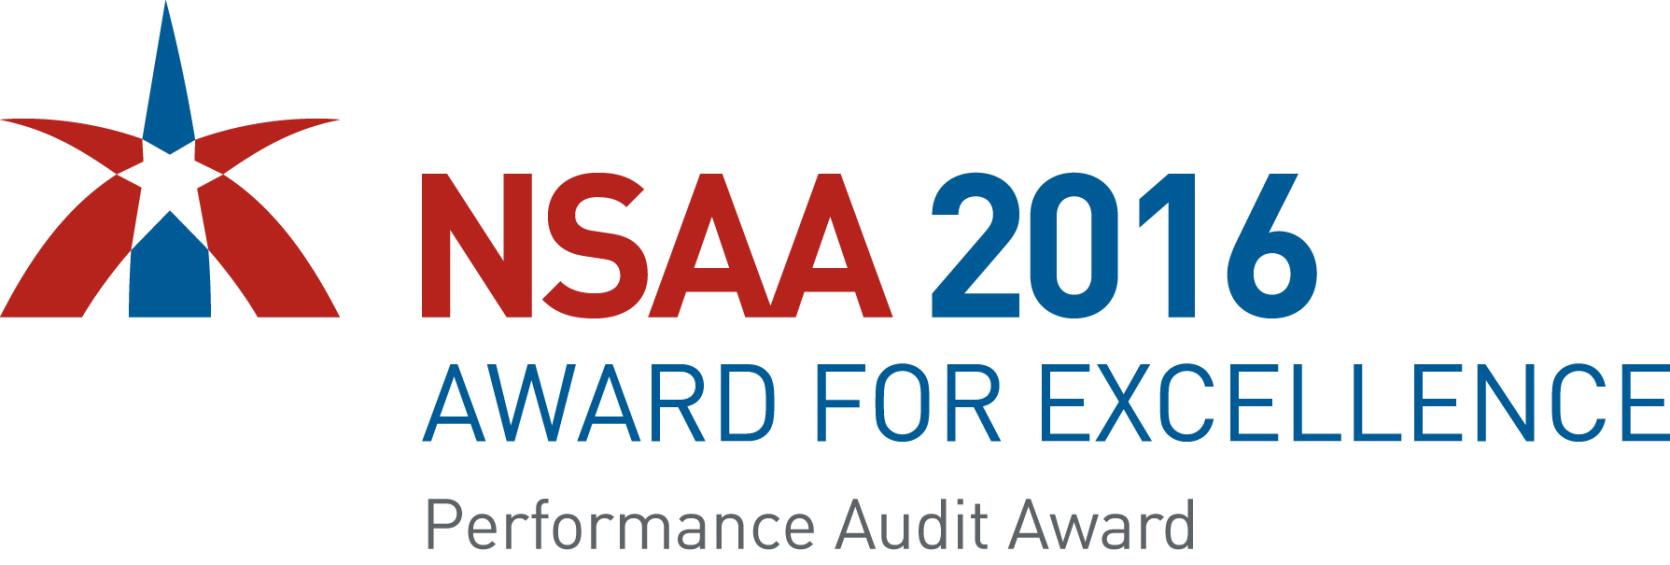 2016 NSAA Award for Excellence Logo